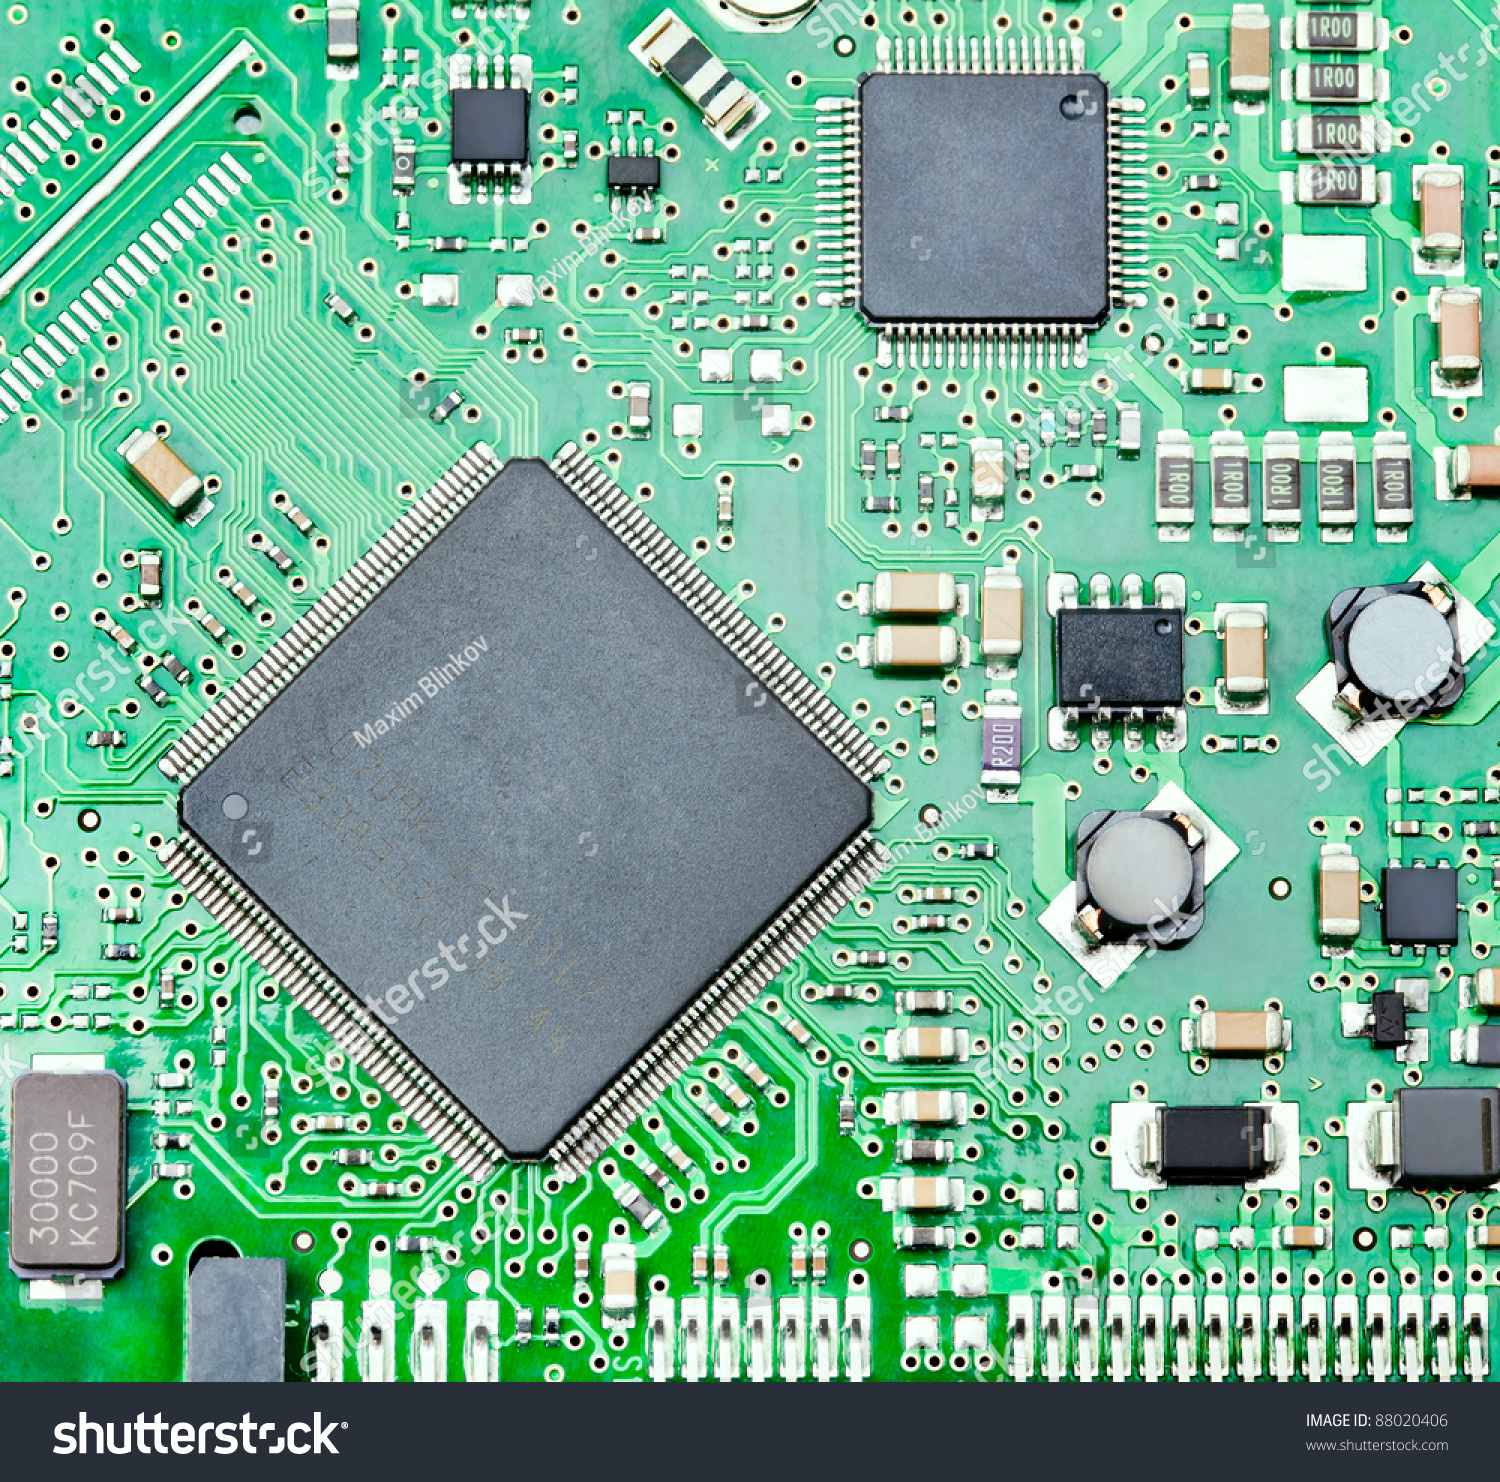 Closeup Computer Micro Circuit Board Stock Photo 88020406 - Shutterstock